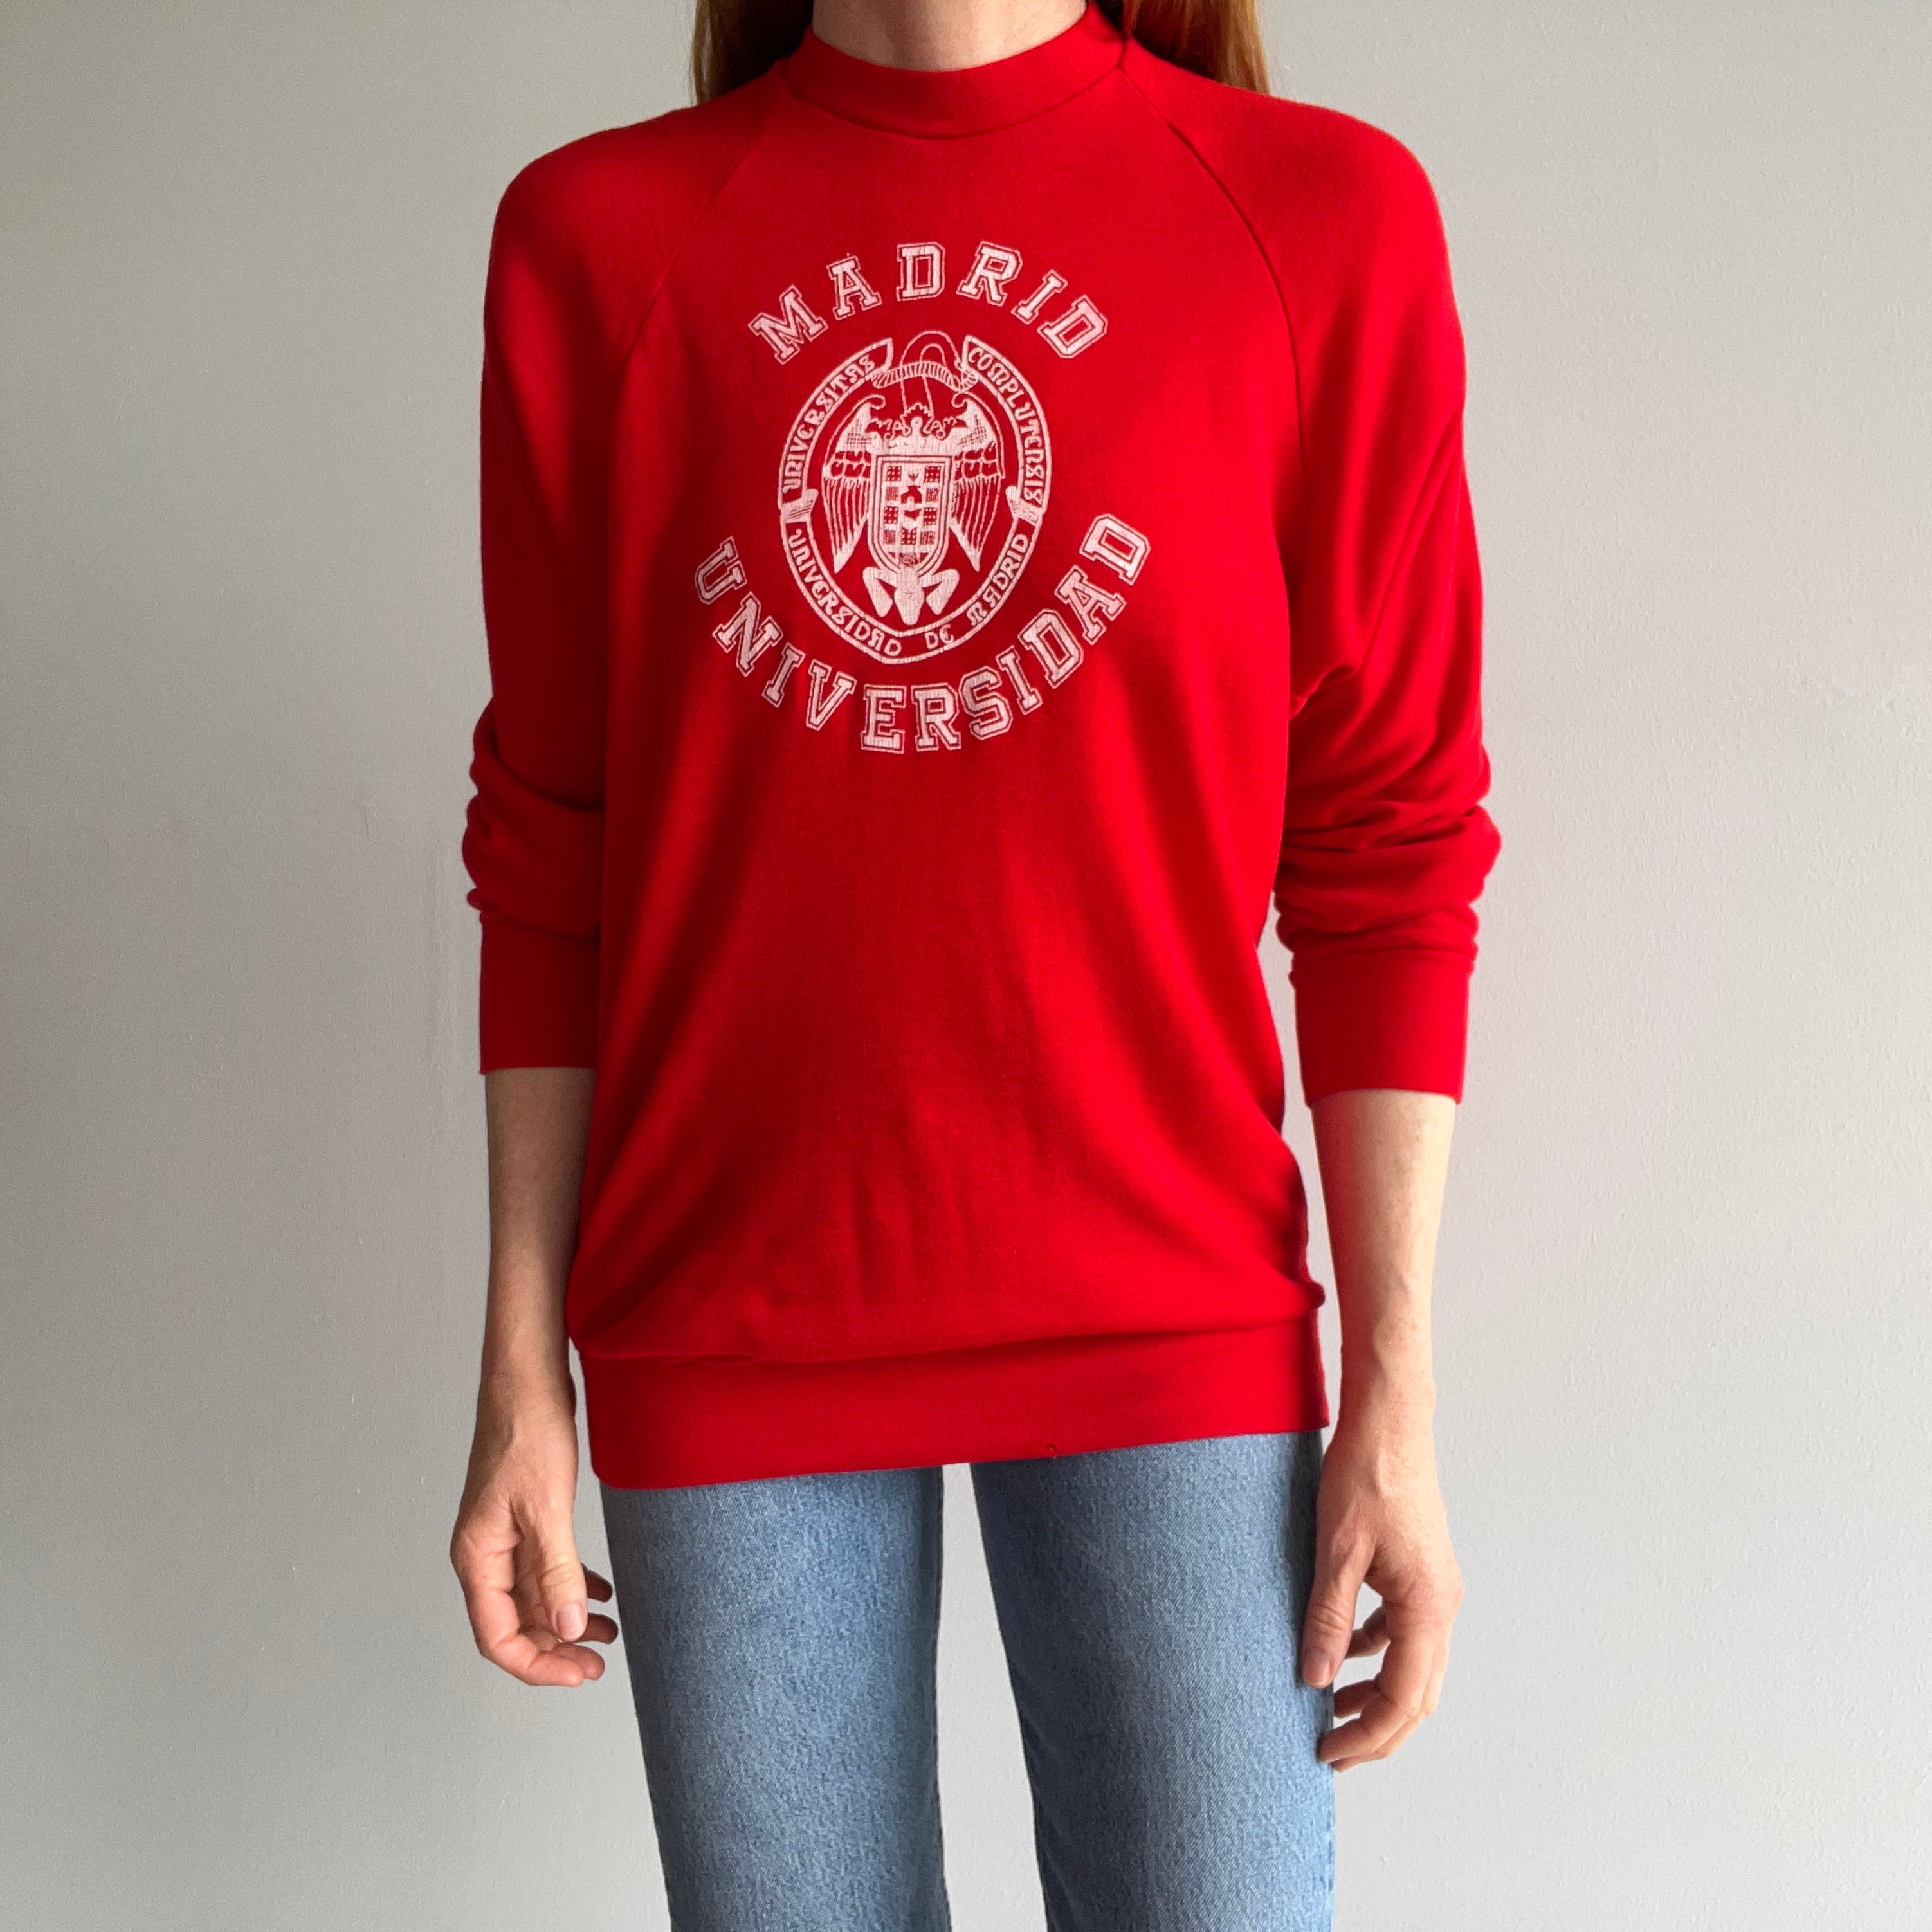 1970s Thin Lightweight and Slouchy Madrid Universidad Sweatshirt